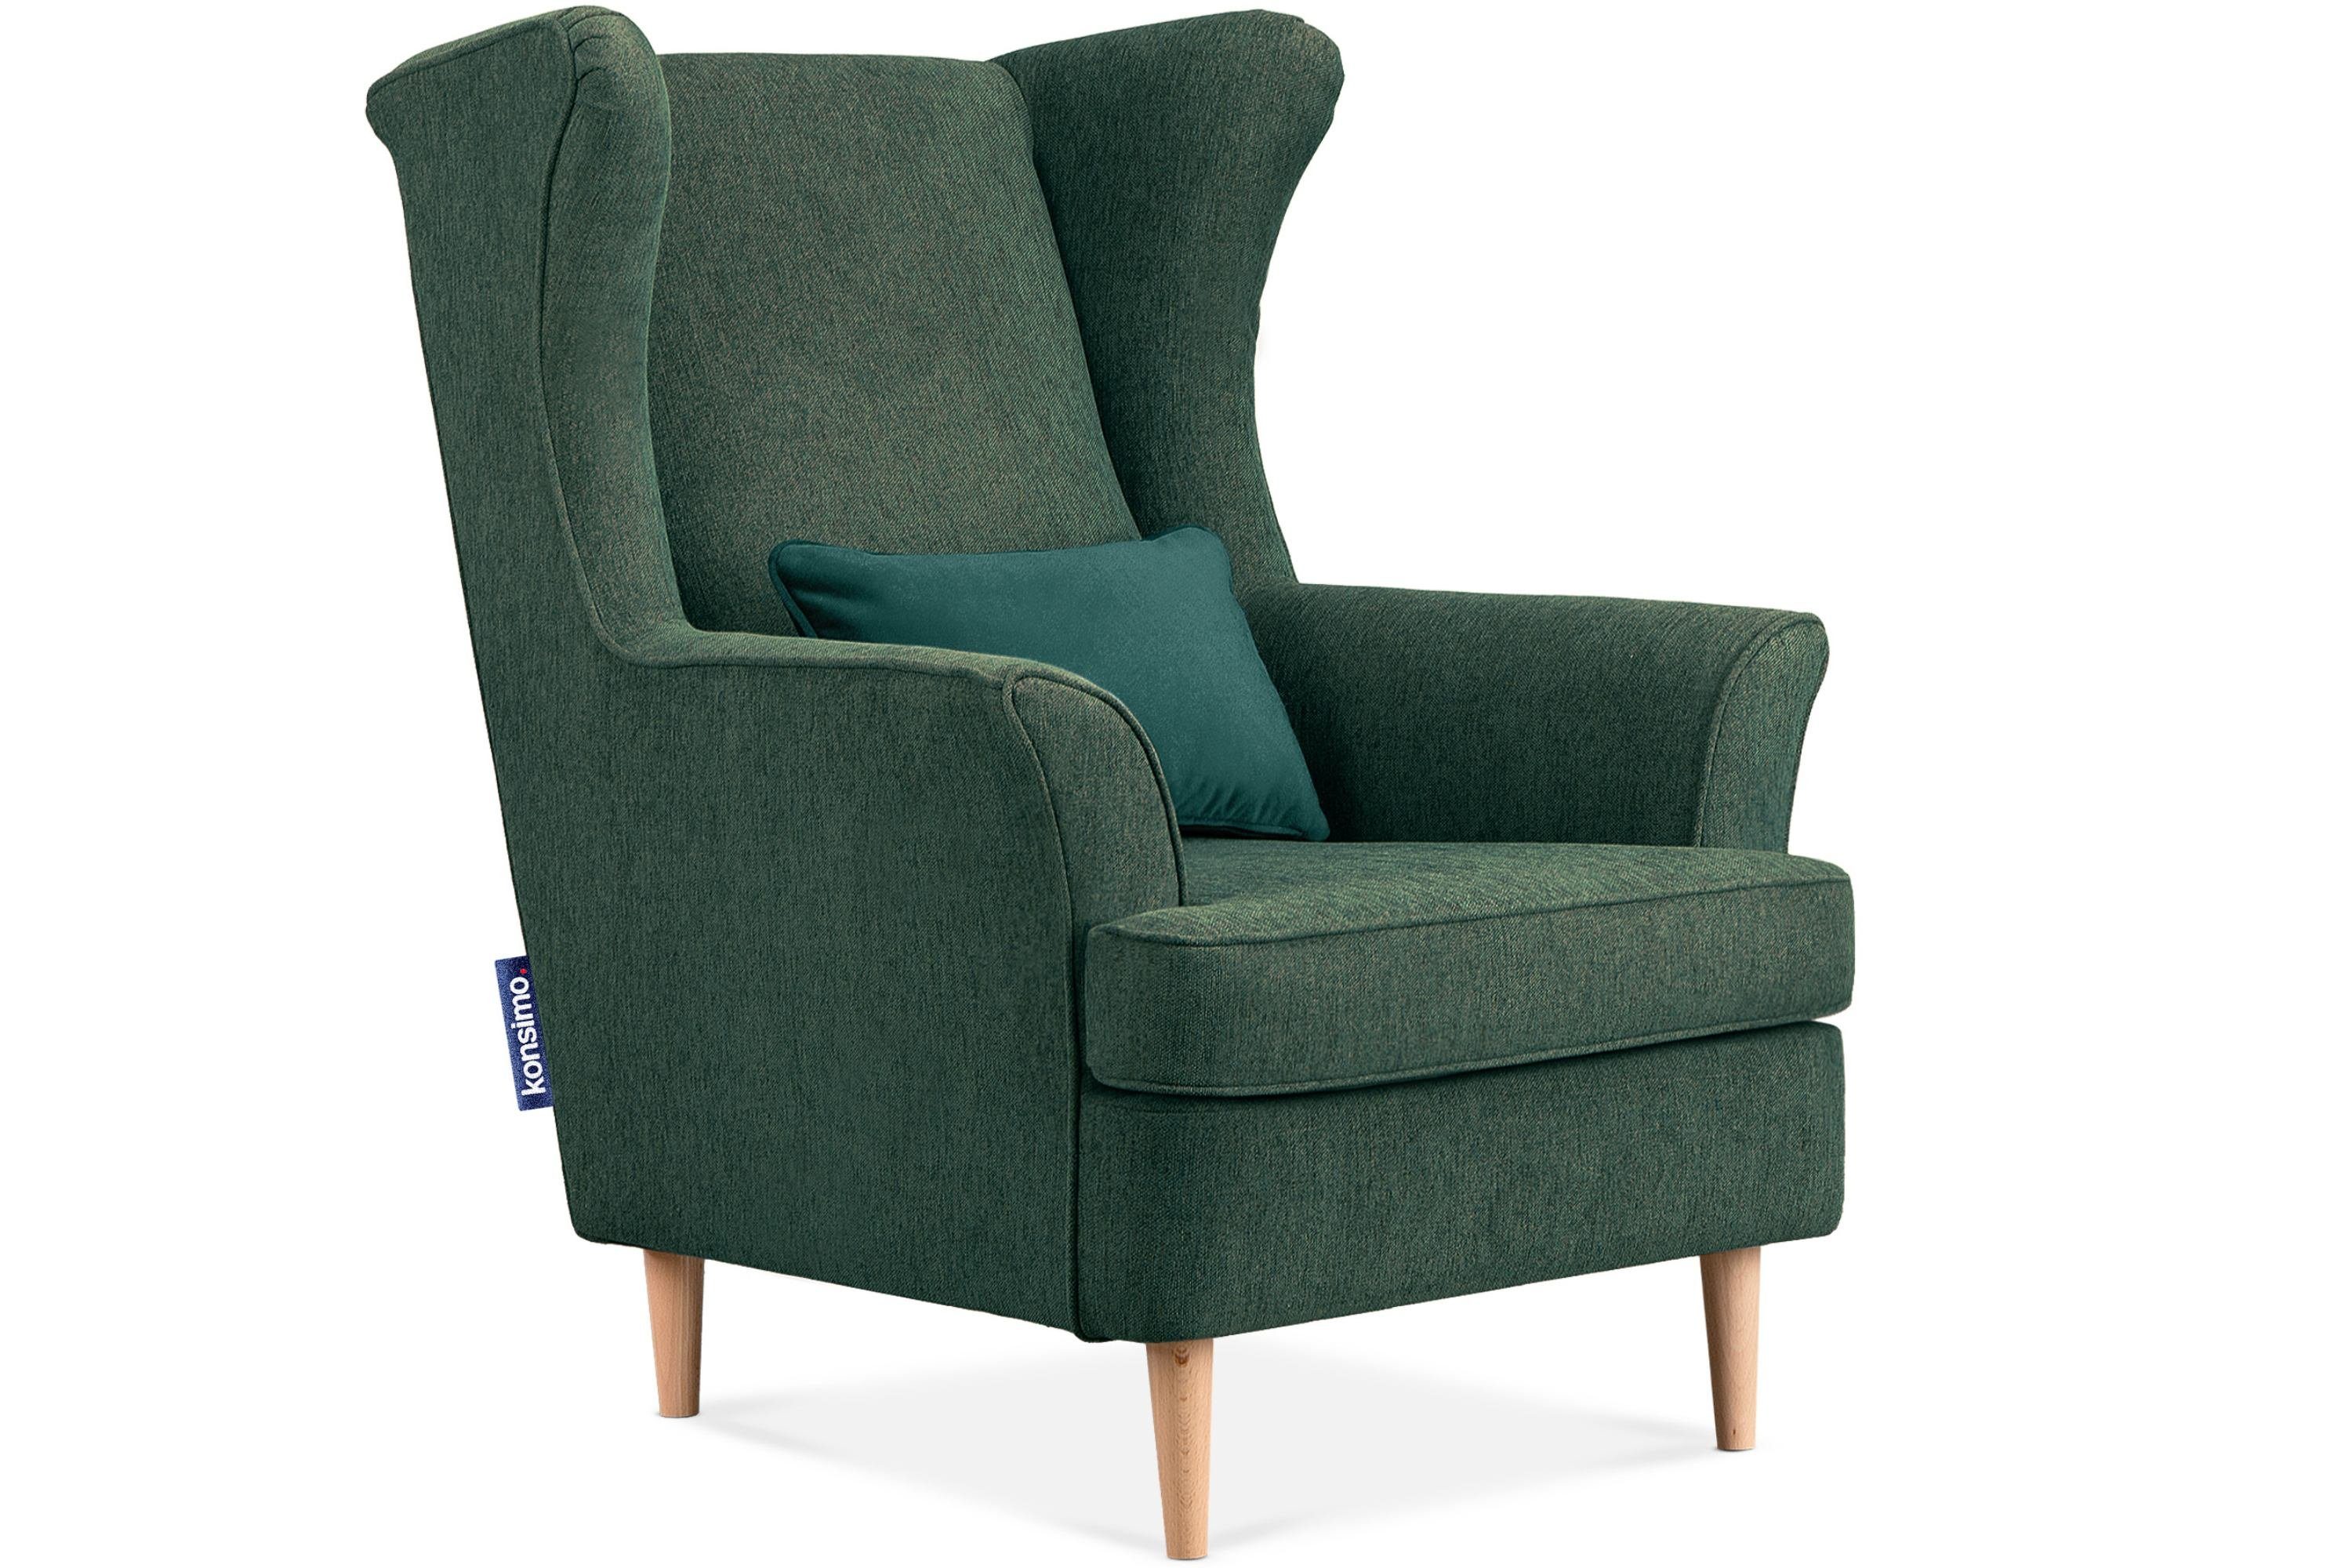 dekorativem Design, hohe Füße, zeitloses Konsimo Ohrensessel STRALIS Kissen Sessel, inklusive